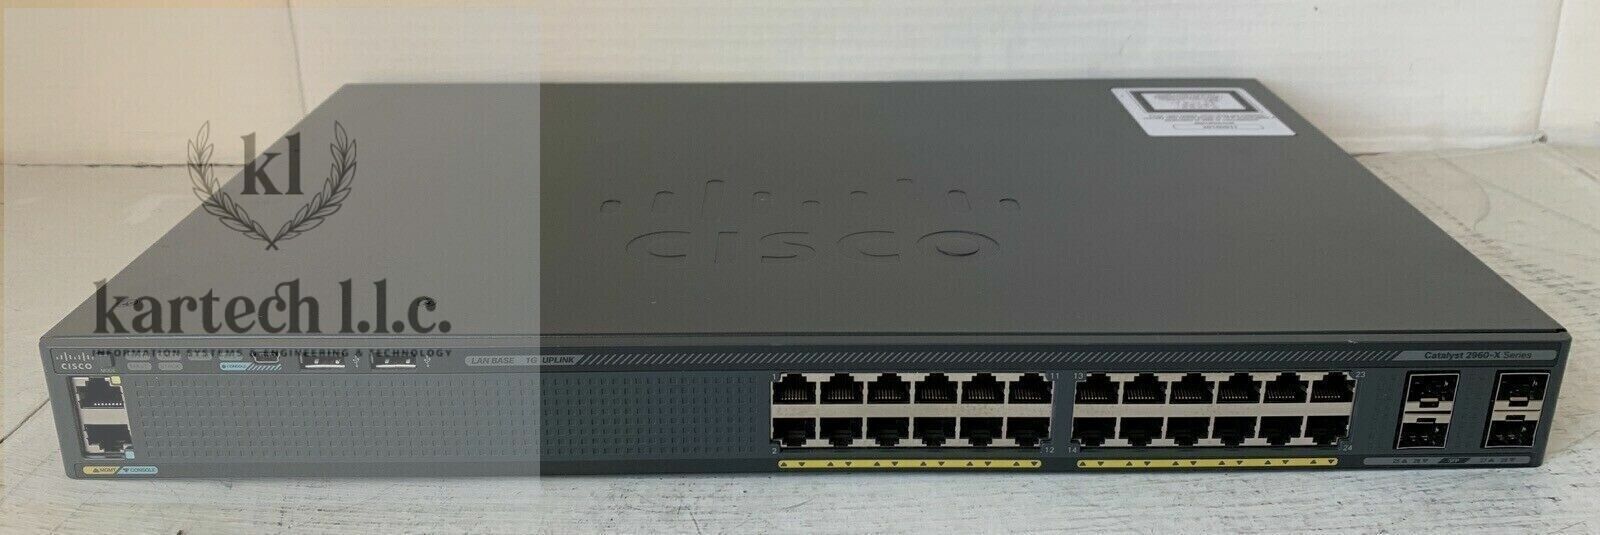 Cisco Catalyst WS-C2960X-24TS-L  24-Port Gigabit Ethernet Switch